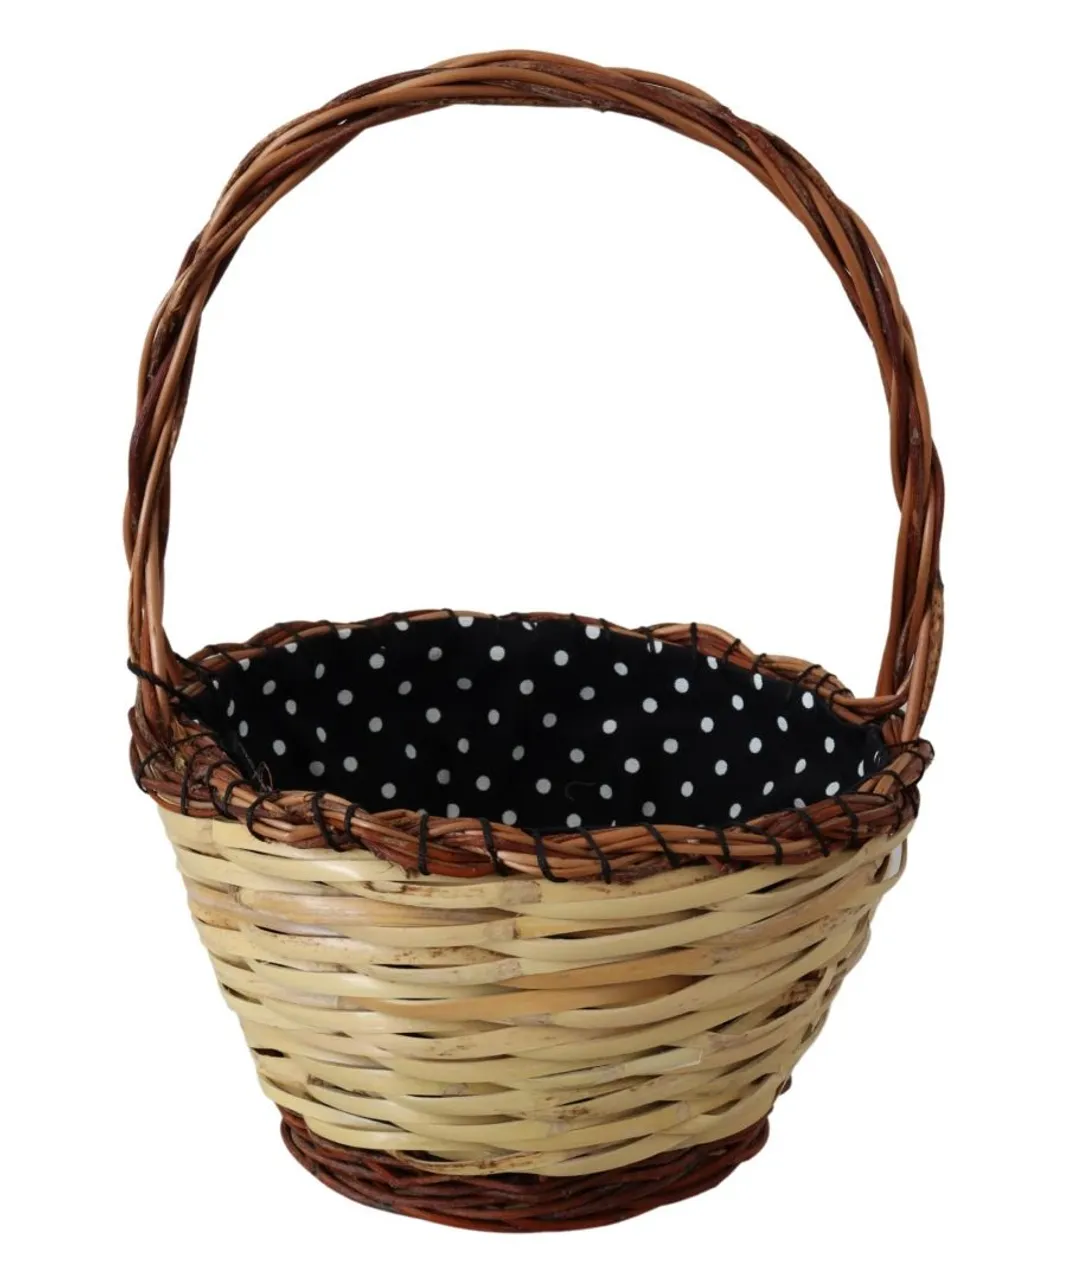 Dolce & Gabbana WoMens Beige Wood Wicker Rattan Basket Tote Bag - One Size